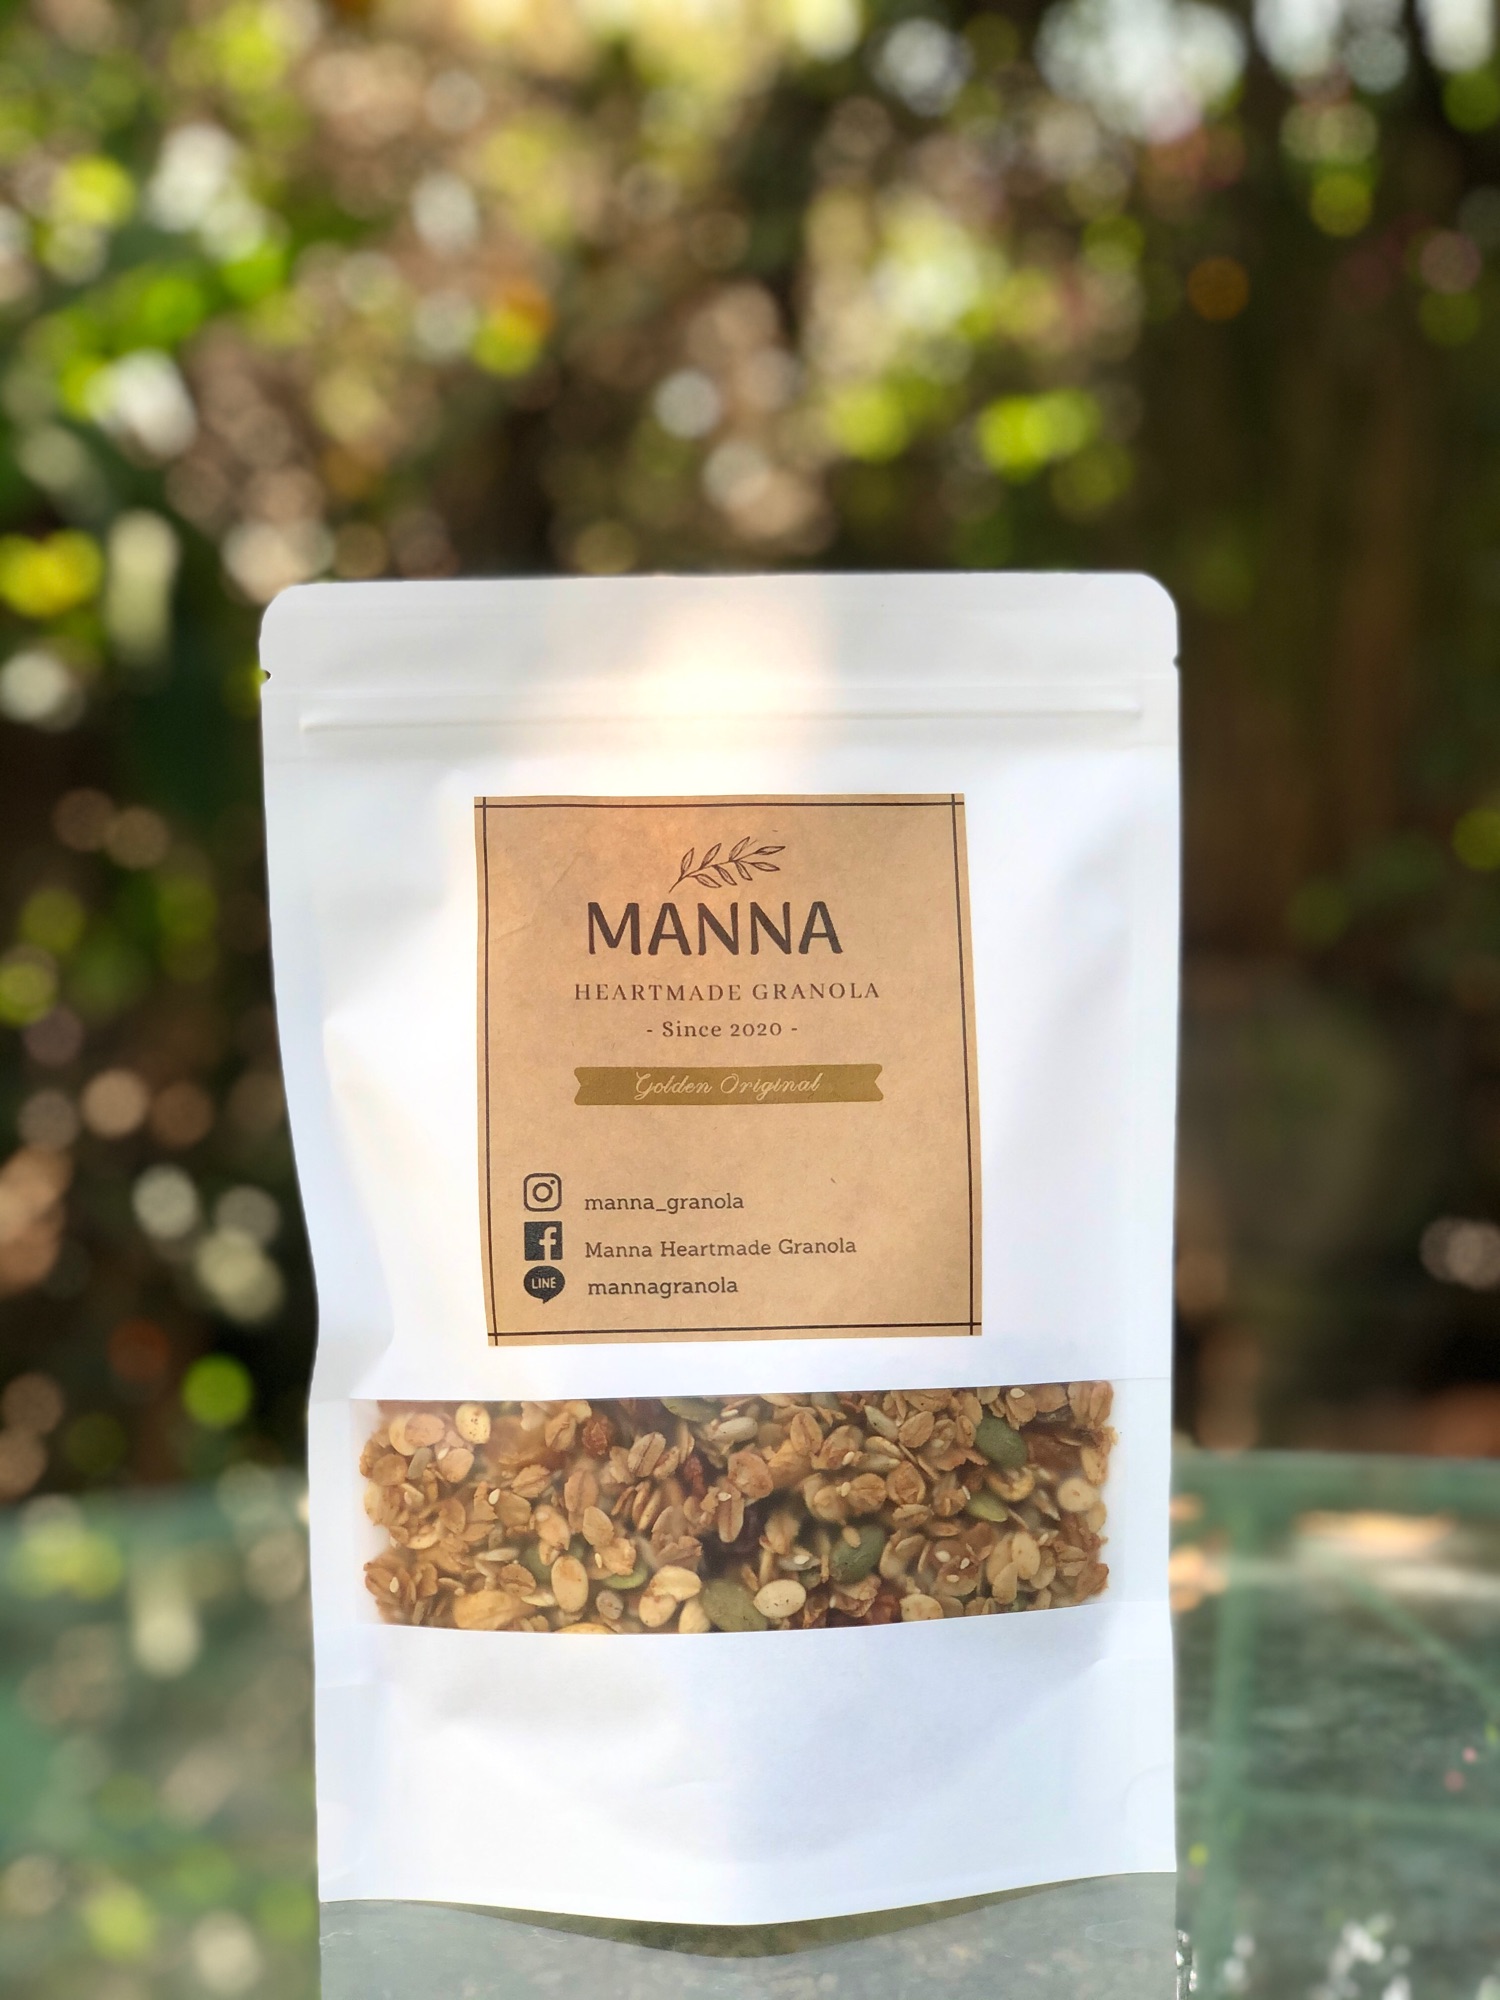 Manna Heartmade Granola กราโนล่า Made to Order รสดั้งเดิม Golden Original ขนาดใหญ่ 180 g